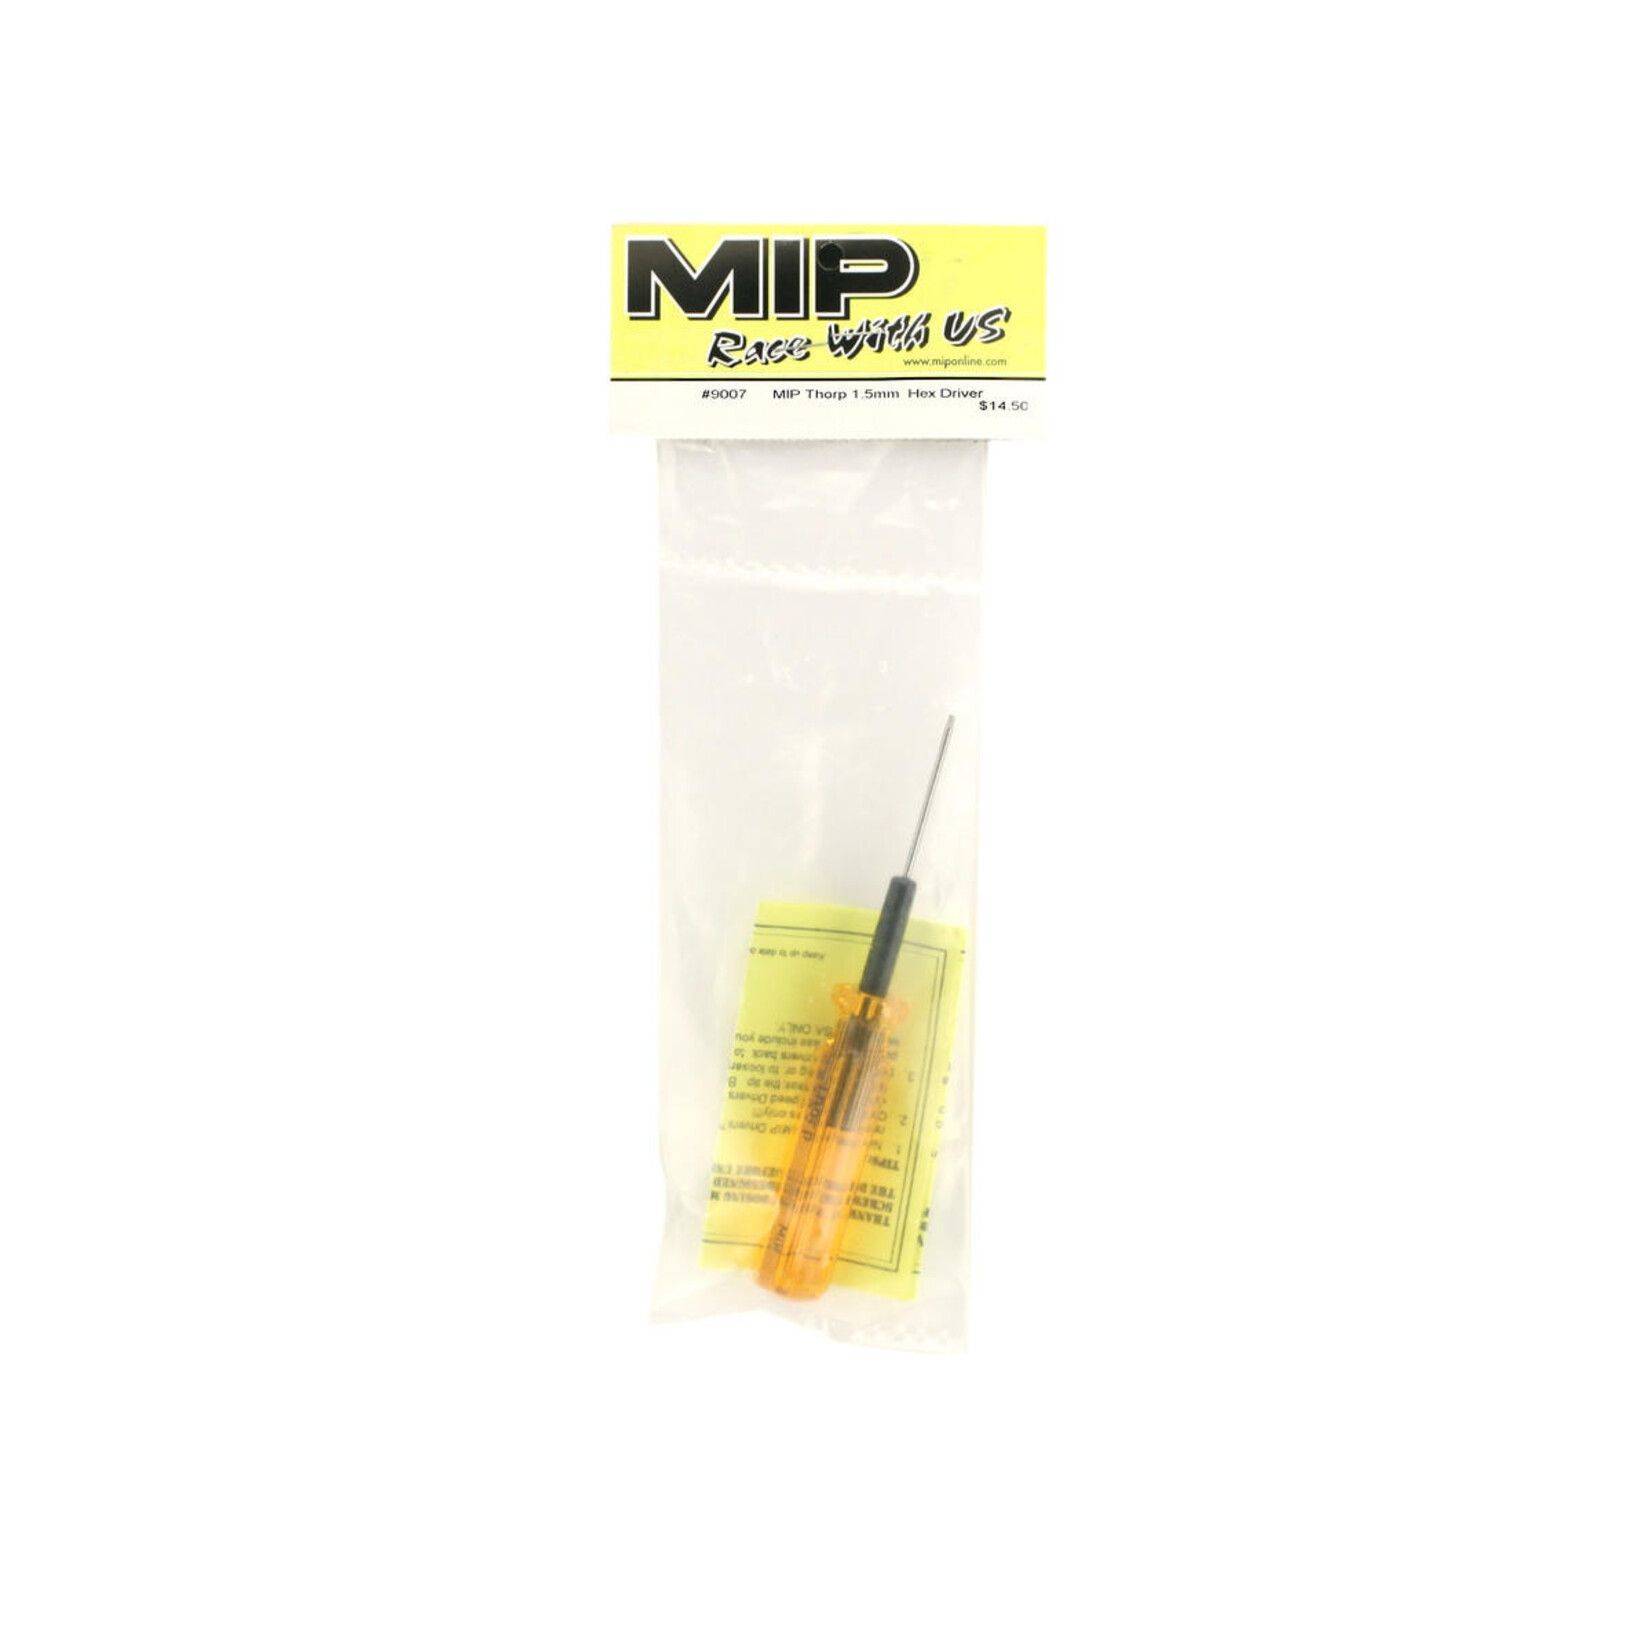 MIP MIP Thorp Hex Driver (1.5mm) #9007